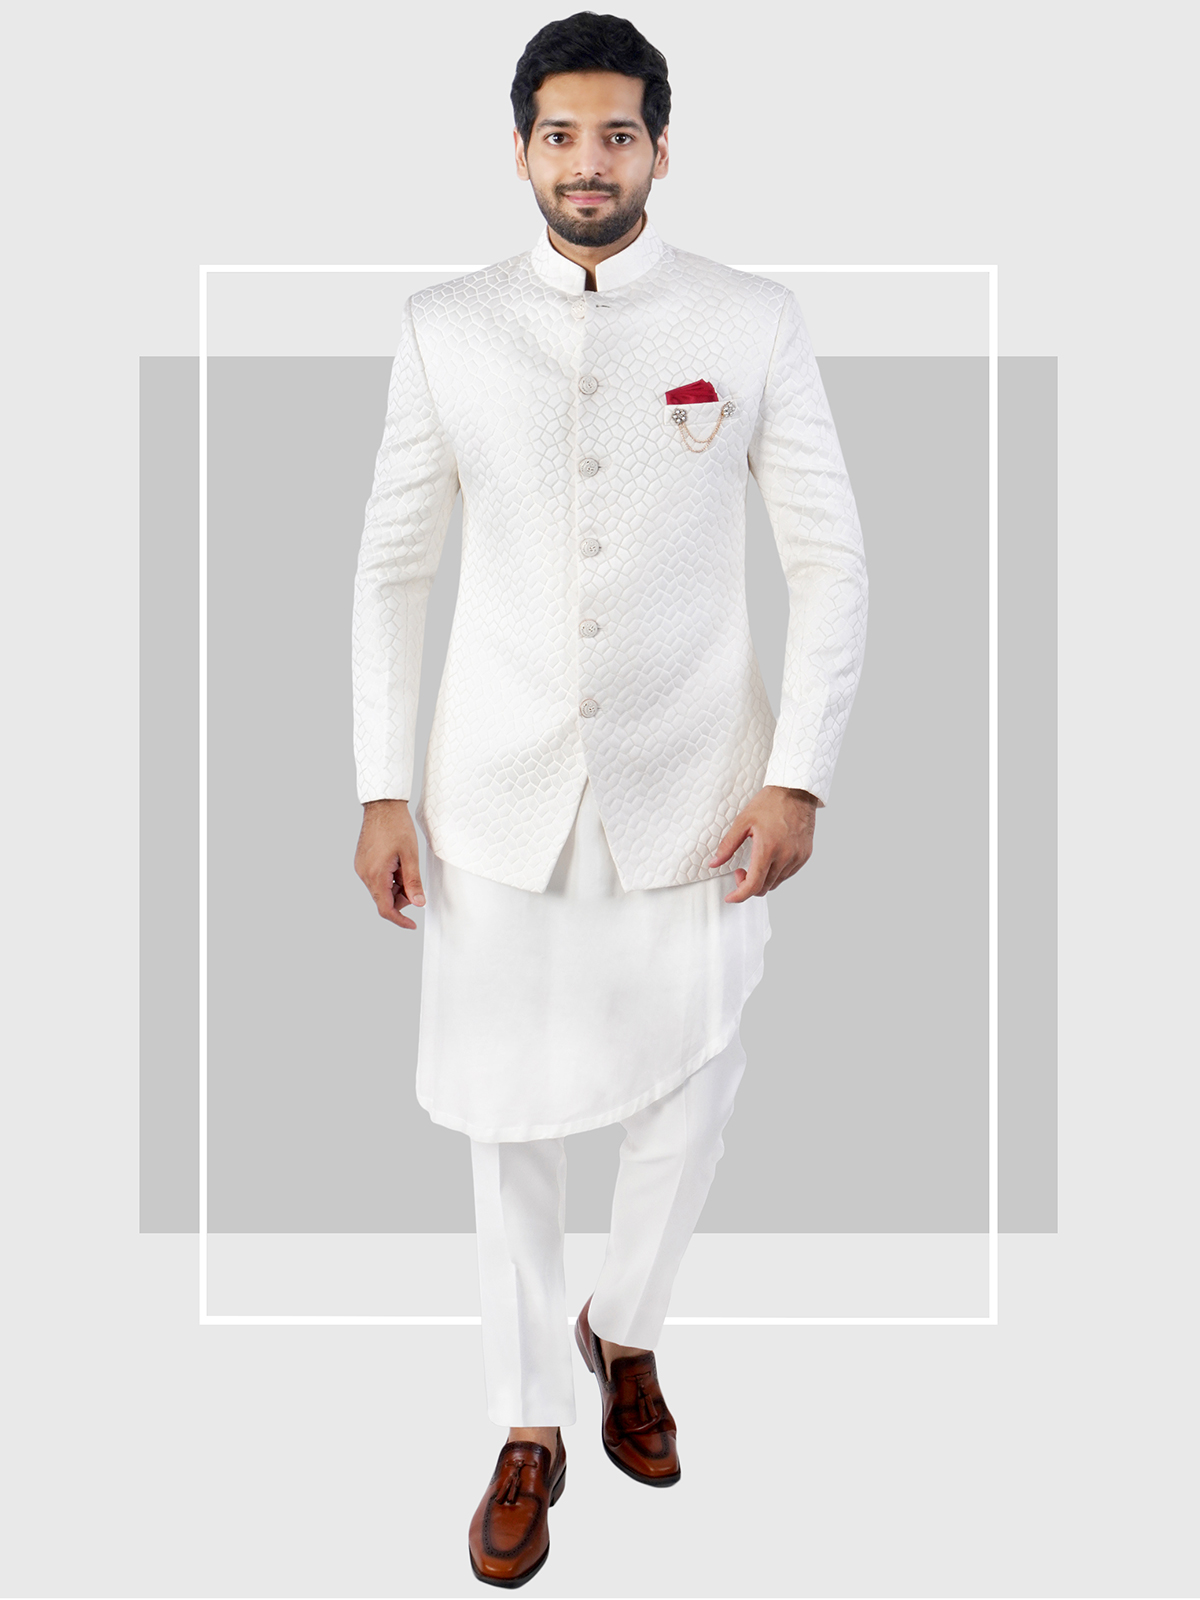 Men's Indo Western Gorgeous Party Wear Sherwani Suit